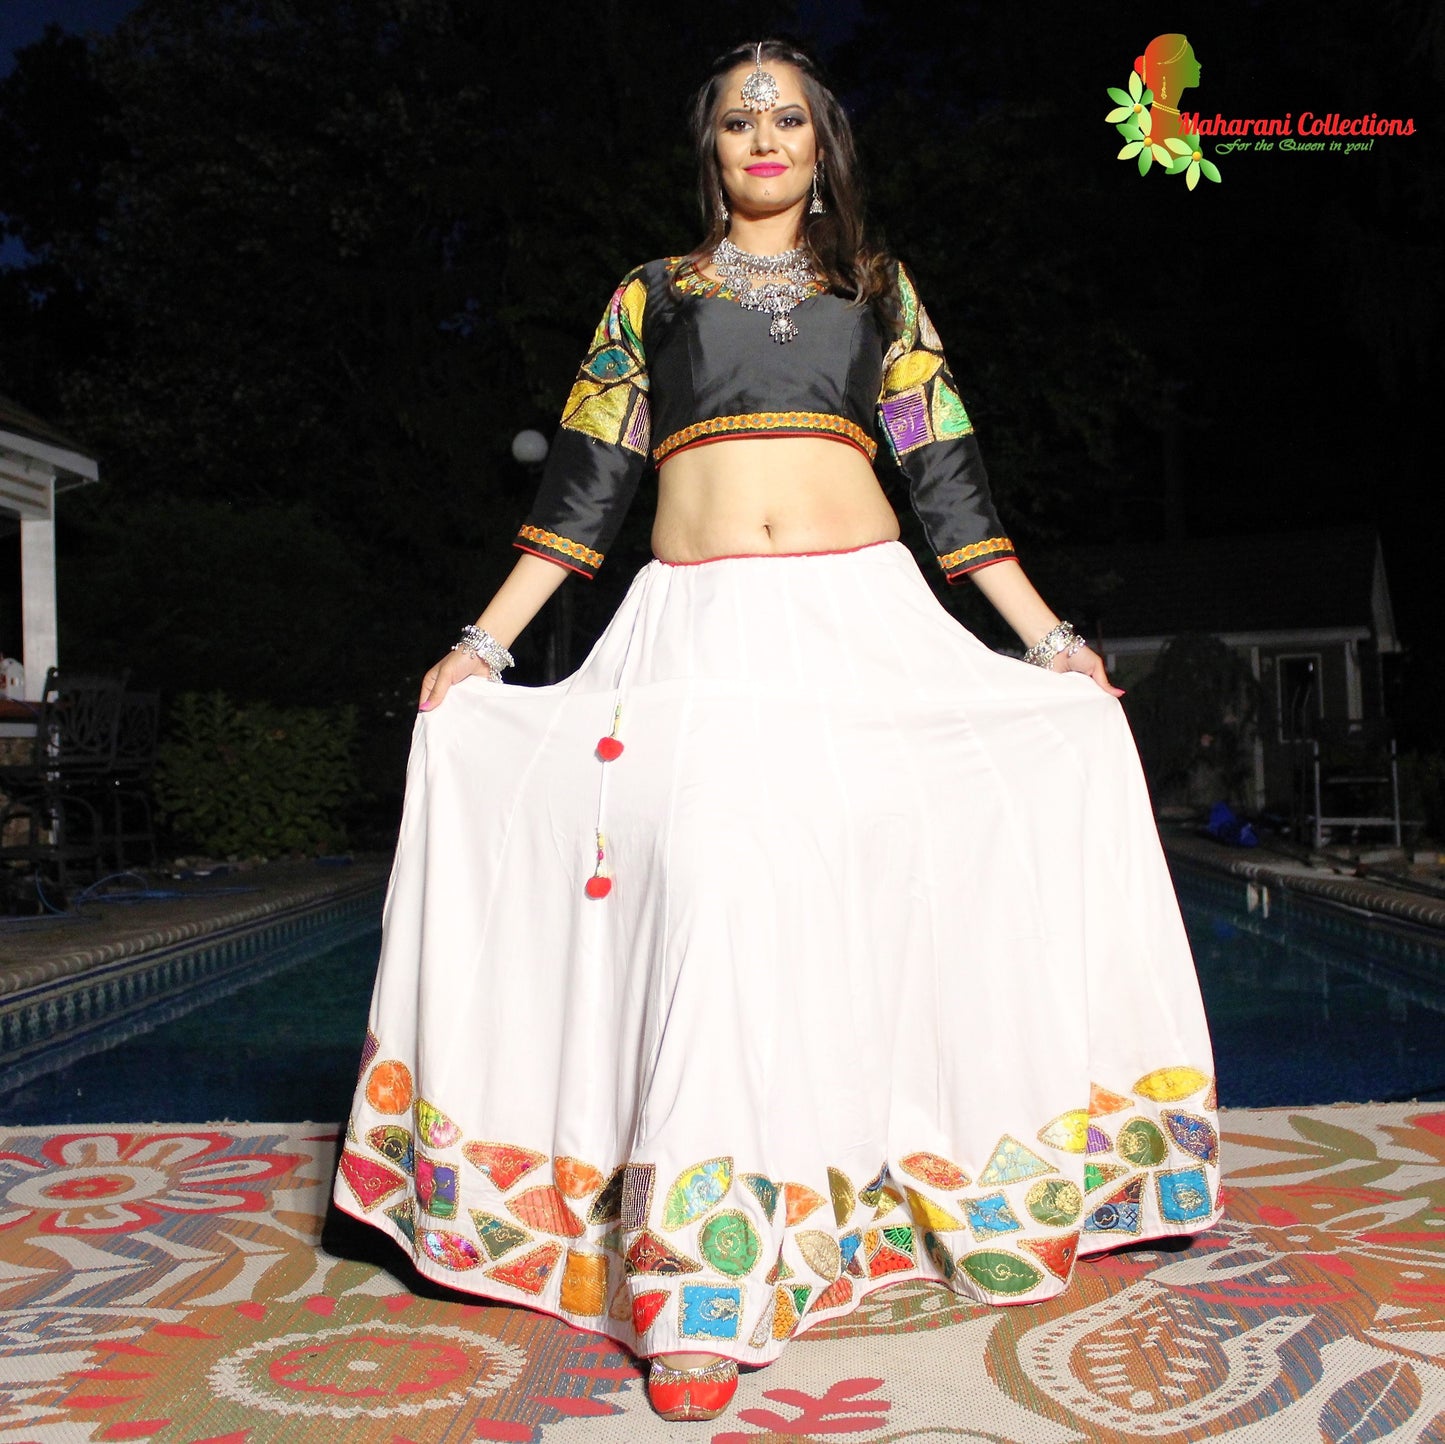 Maharanis Festive Silk Chania Choli with Dupatta - Red/White/Black (M)